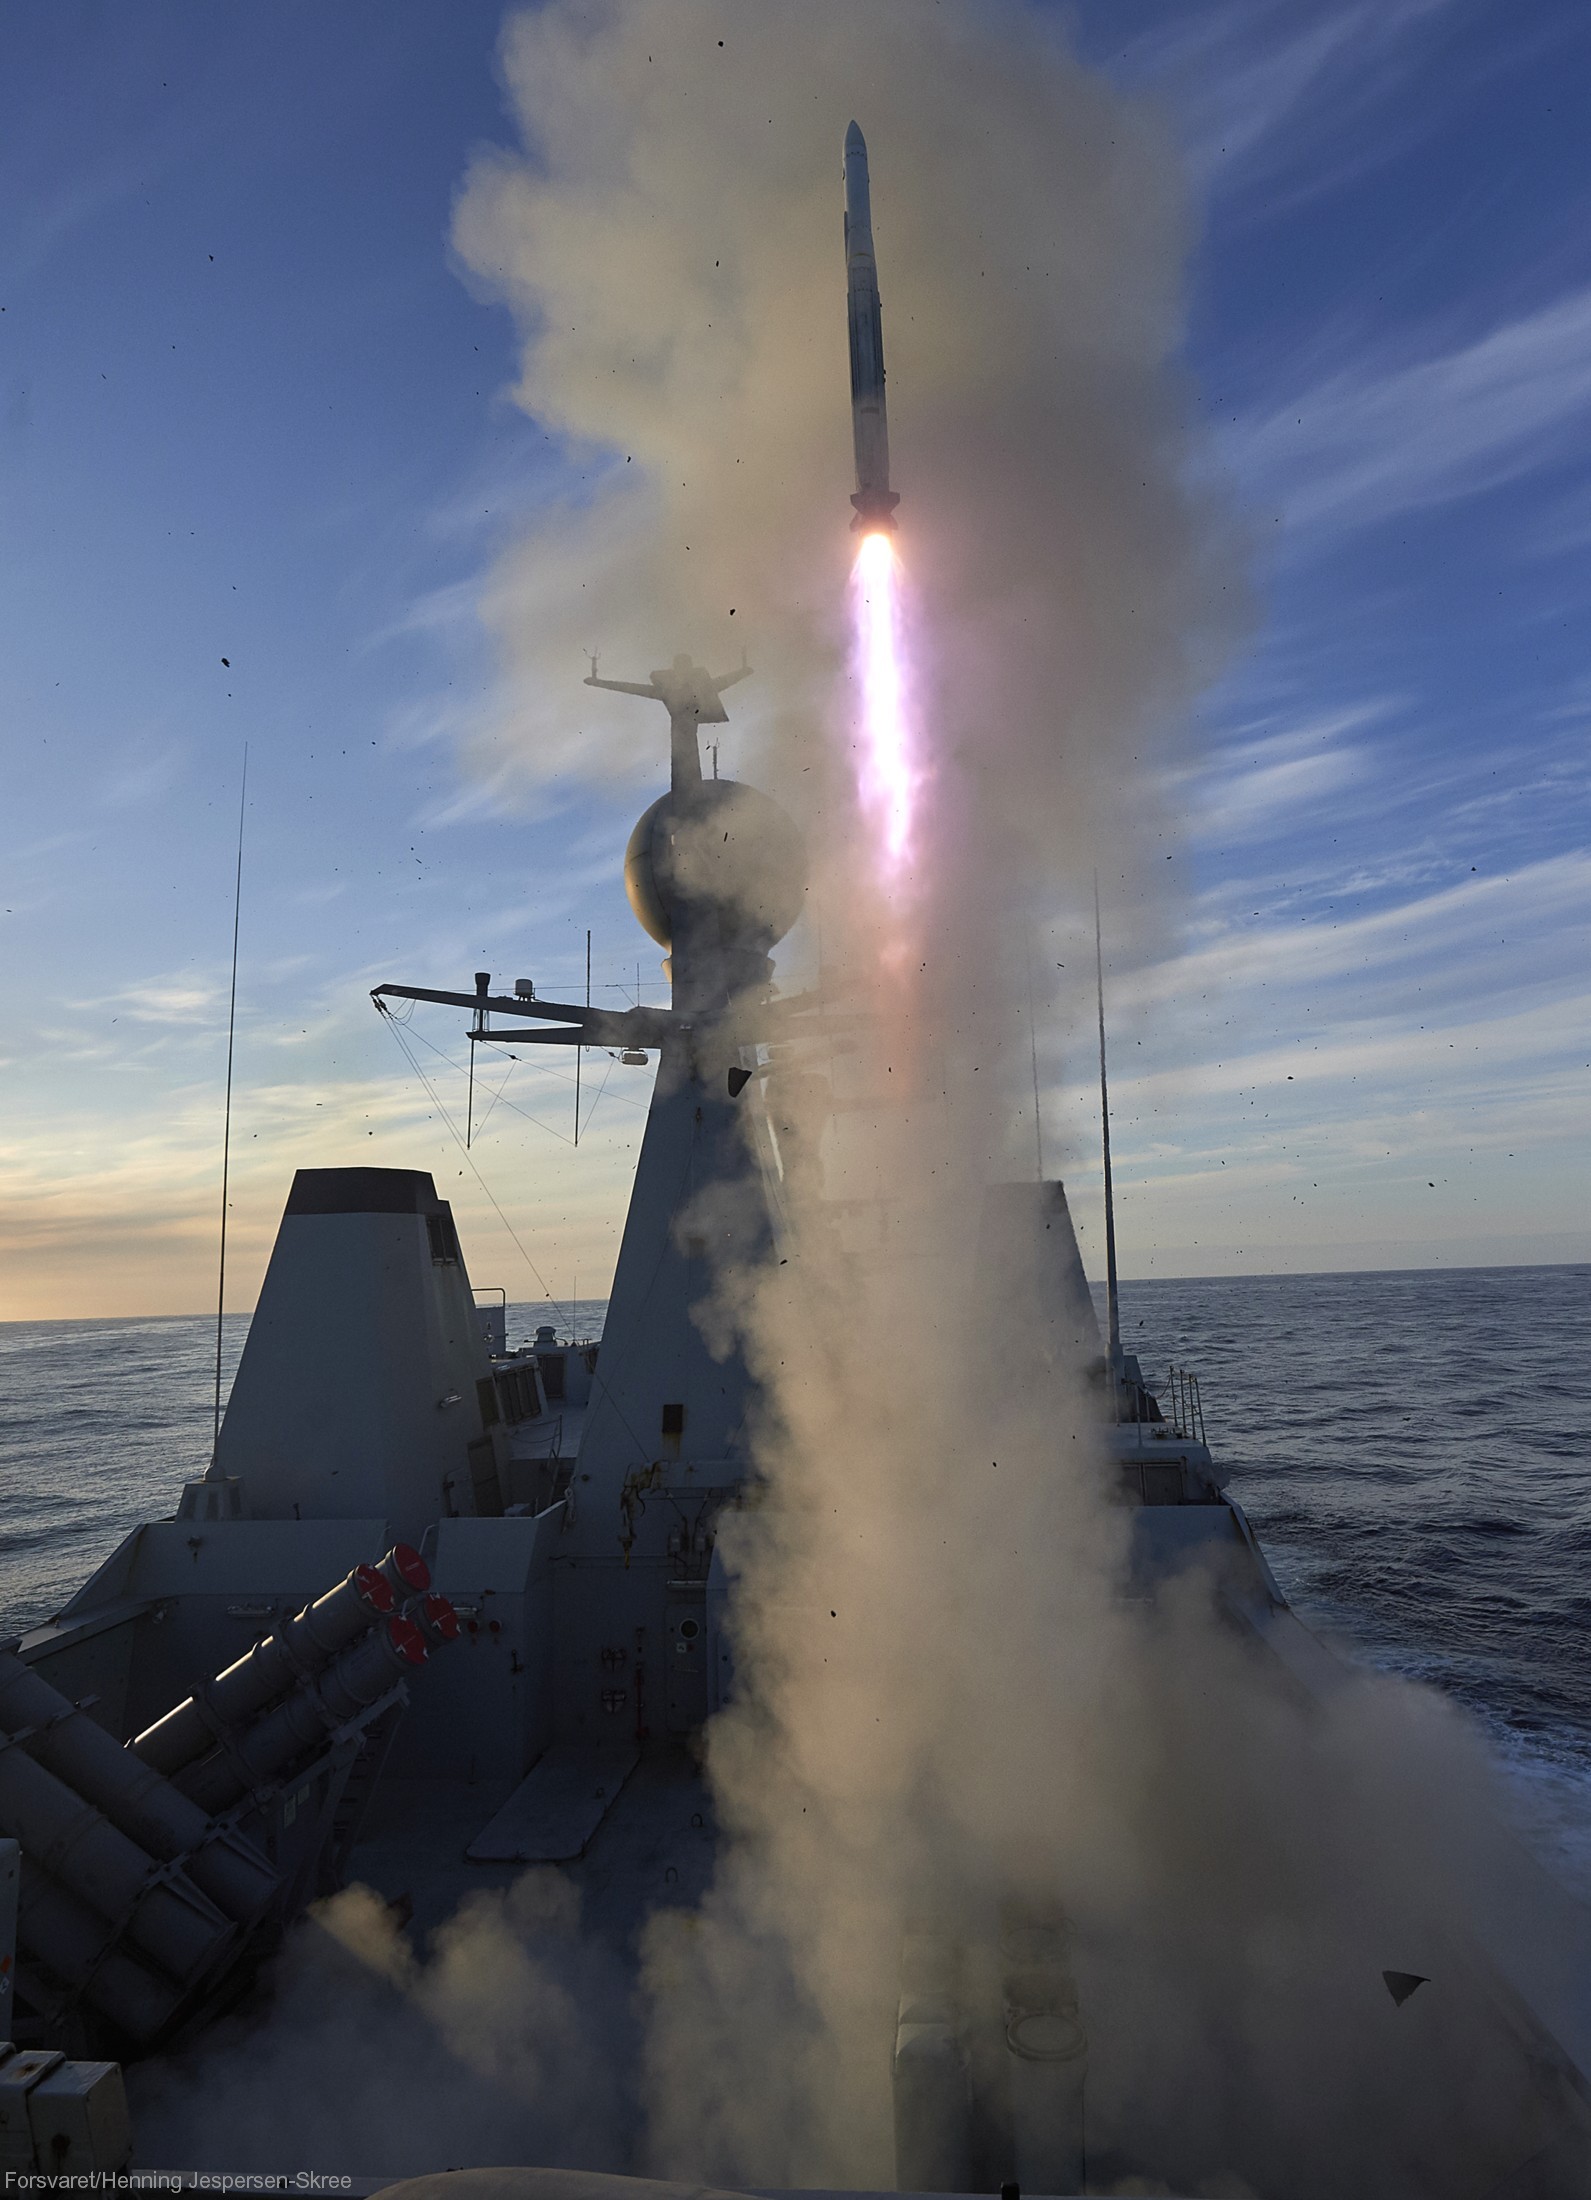 l-16 hdms absalon command support ship frigate f-341 royal danish navy 38 rim-162 evolved sea sparrow missile sam essm